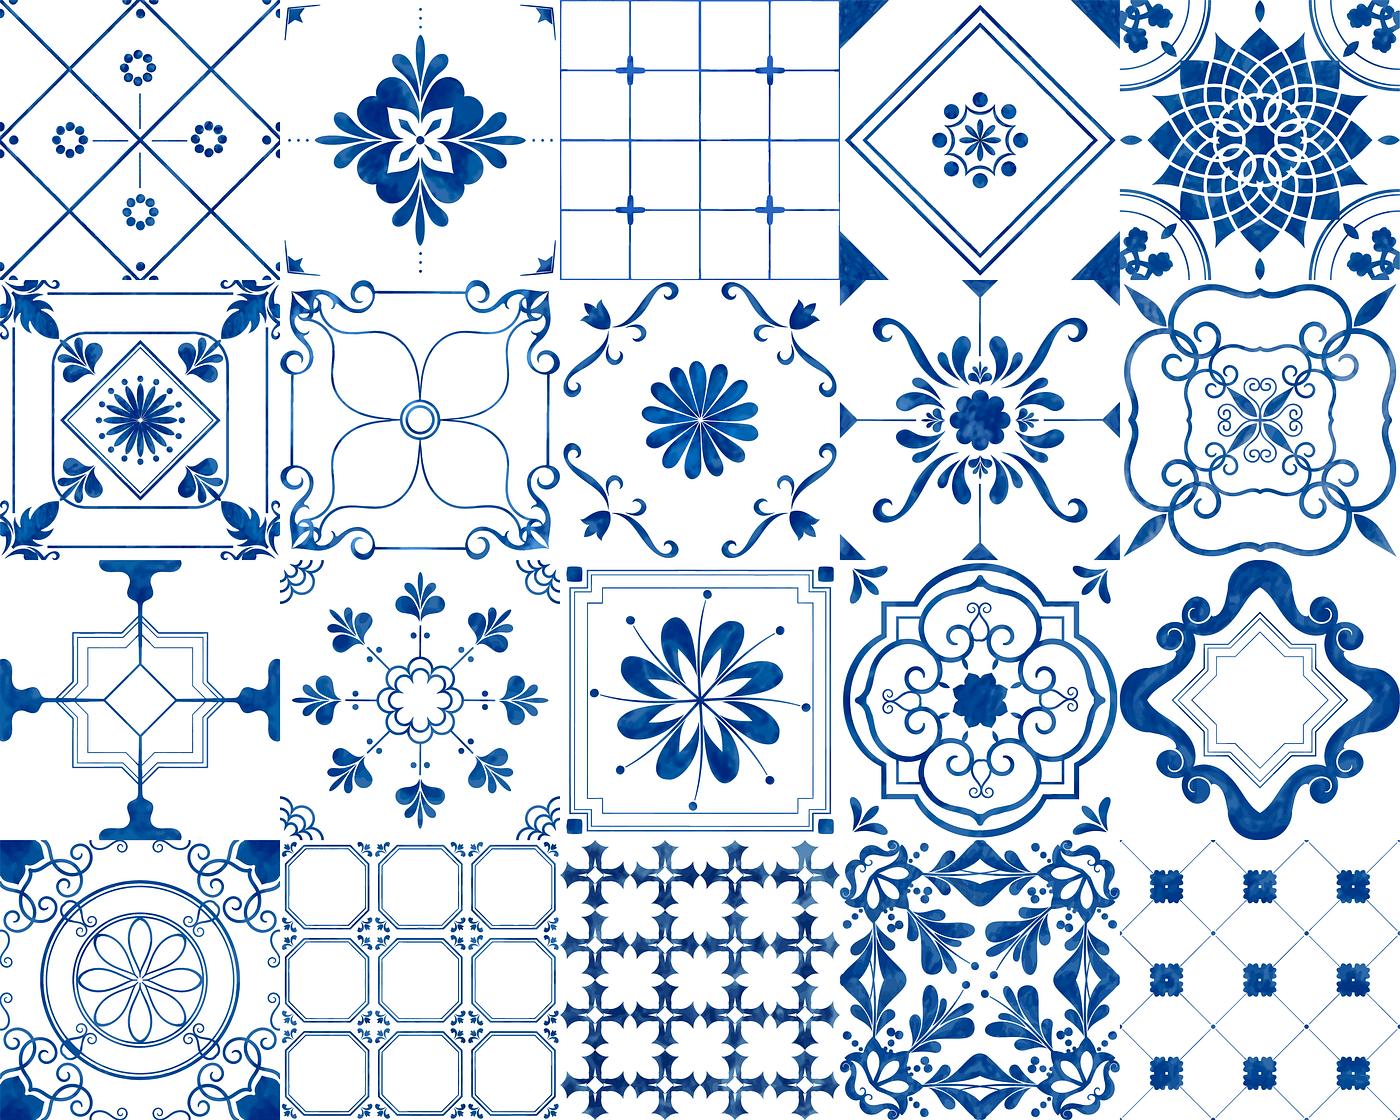 Download Vintage patterned tiles | Free stock vector - 399165